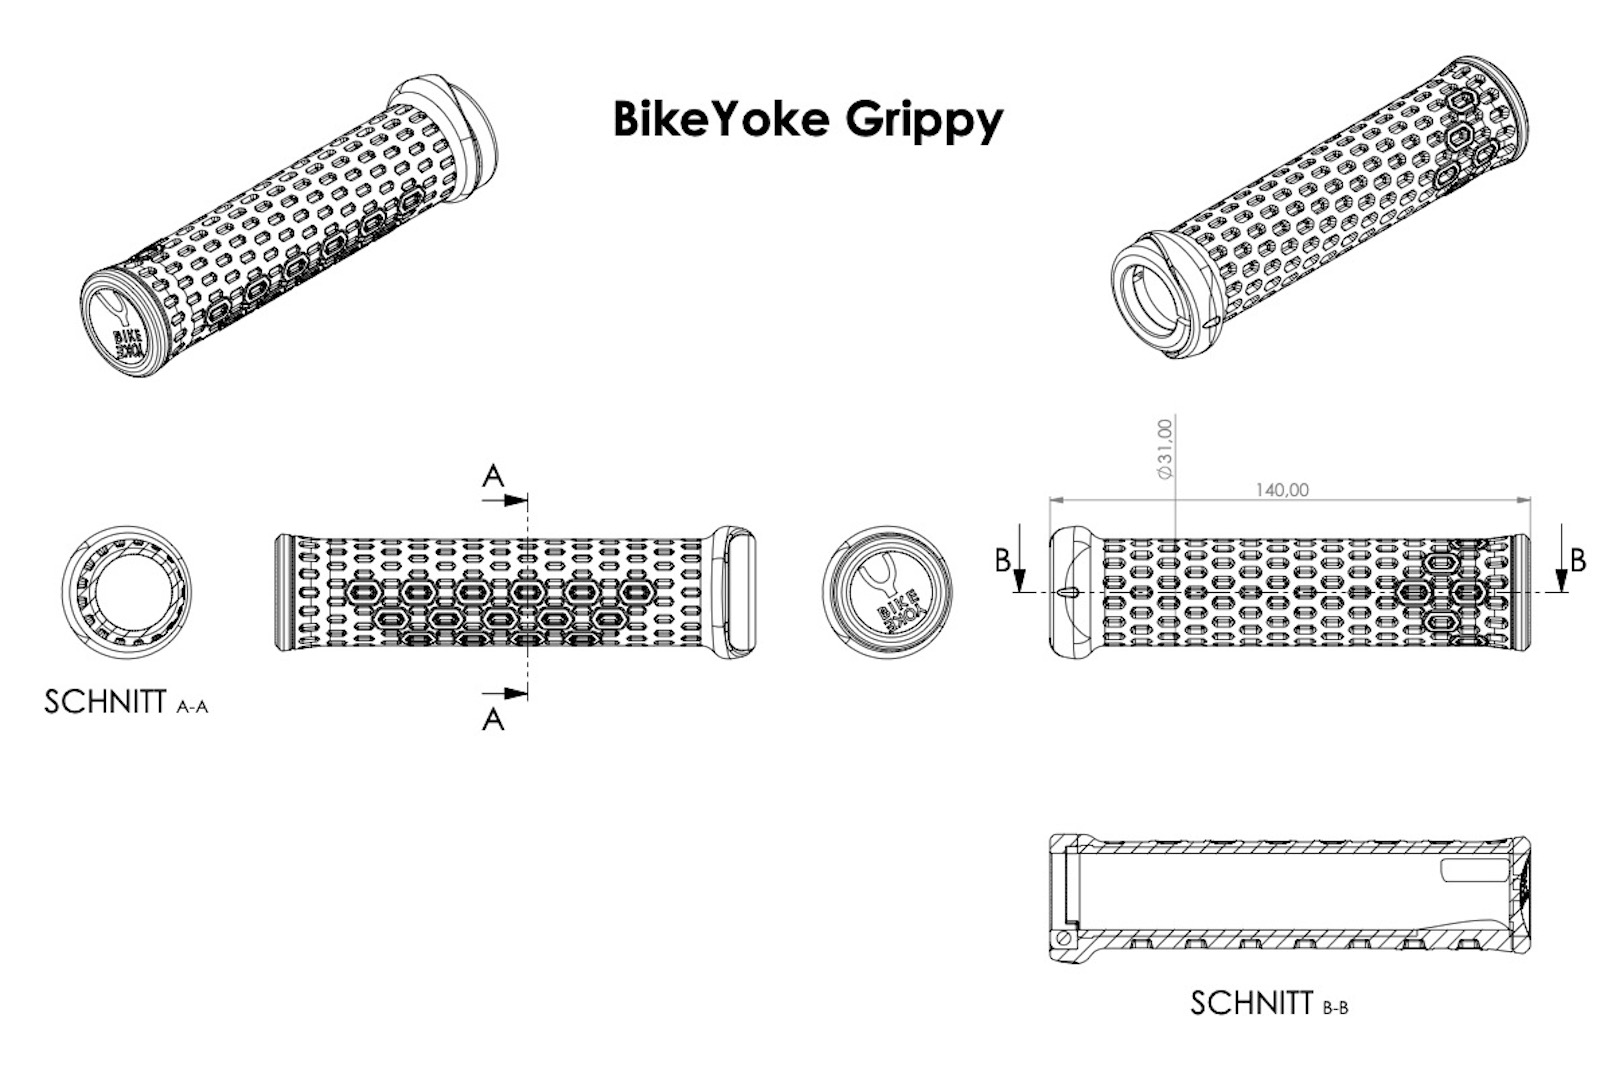 BikeYoke Presents the New Grippy